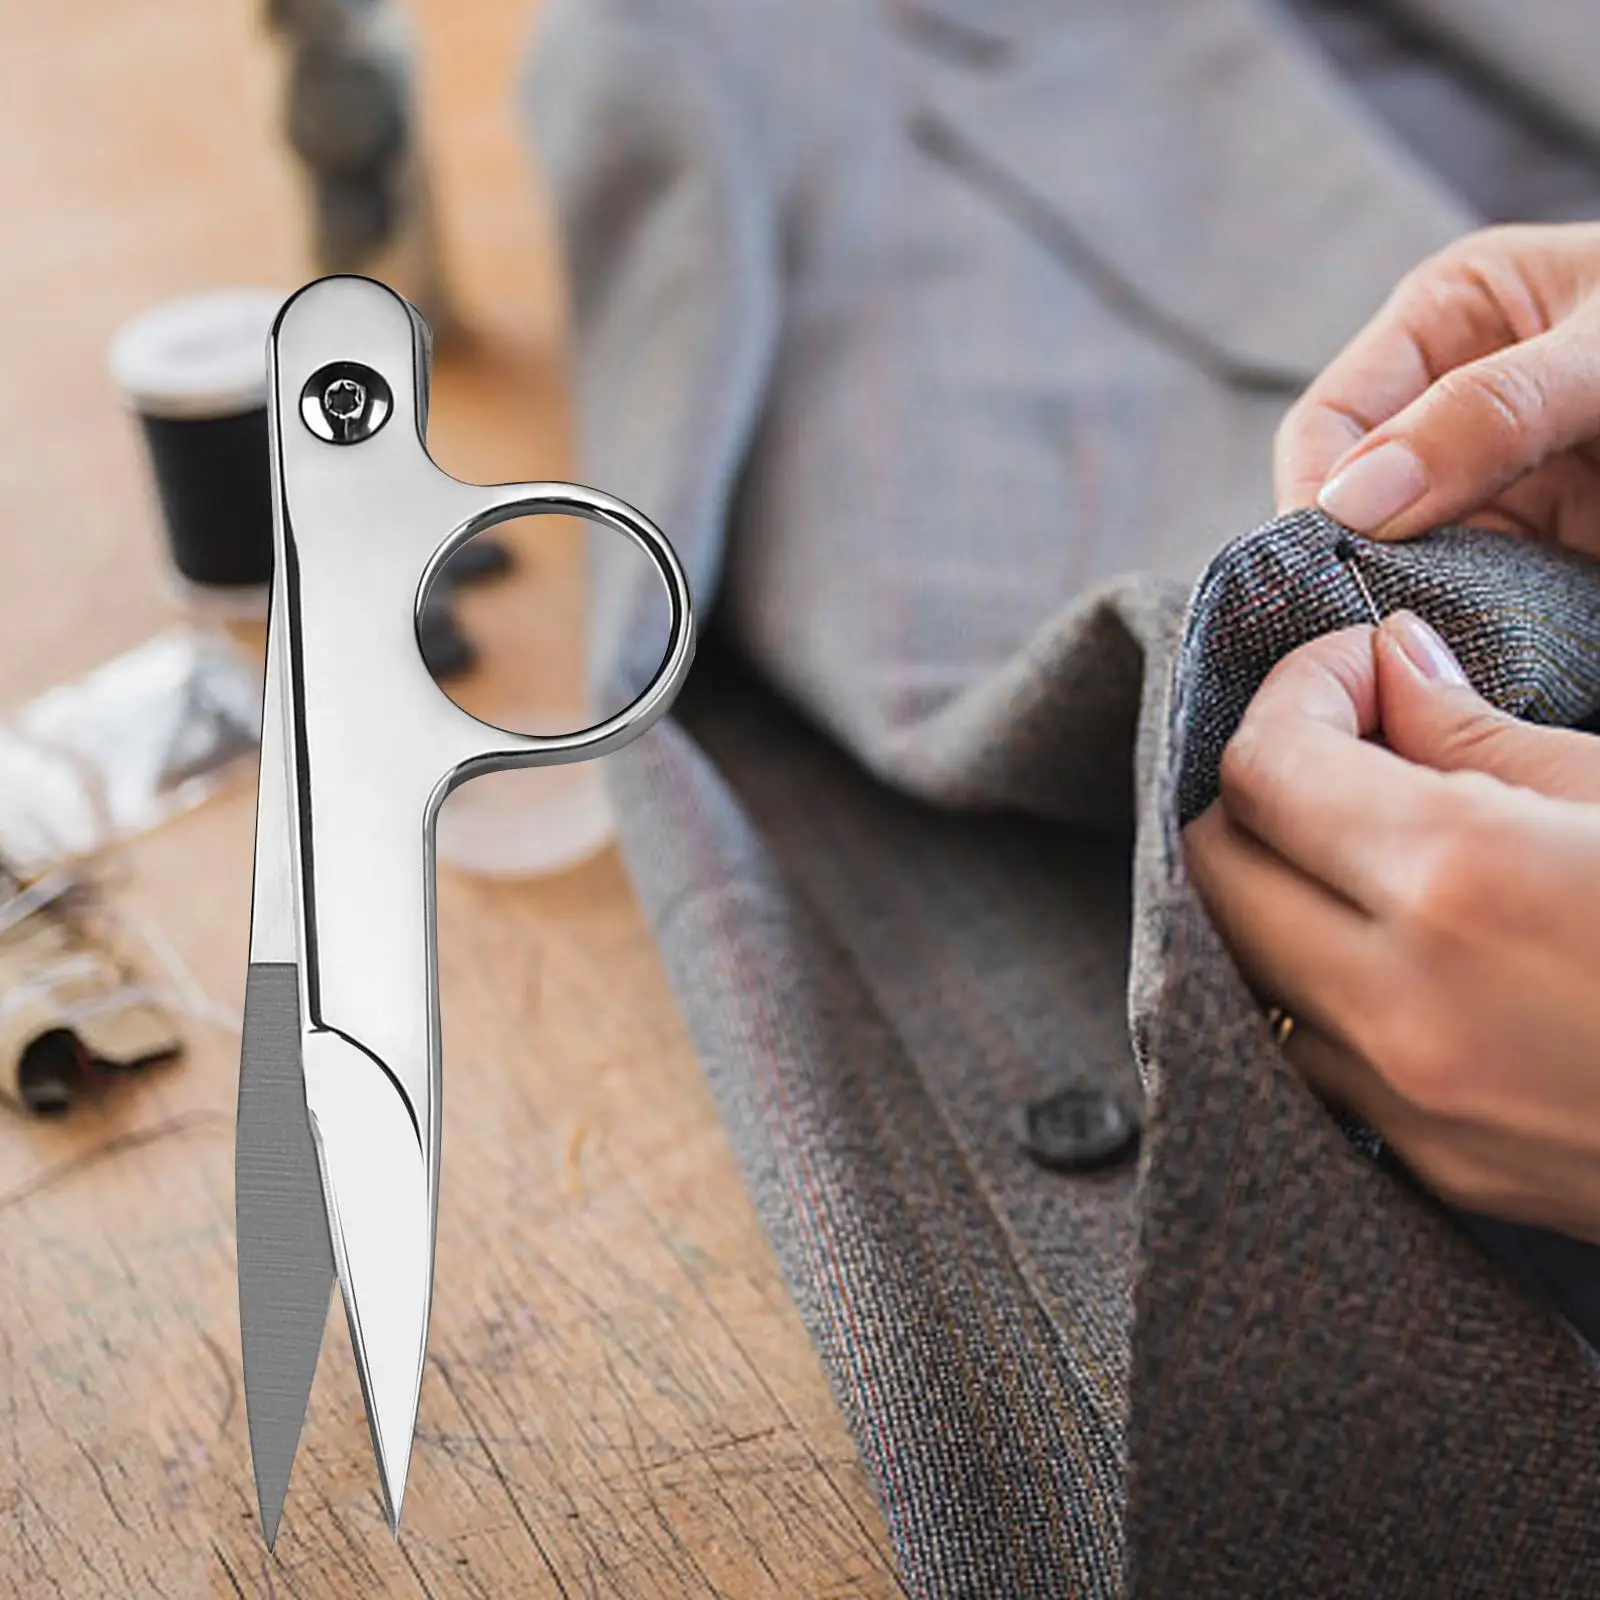 Sewing Scissors Mini Thread Scissors Trimming Nipper Embroidery Snipper Handheld Tailor Scissors Thread Cutter for Dressmaking